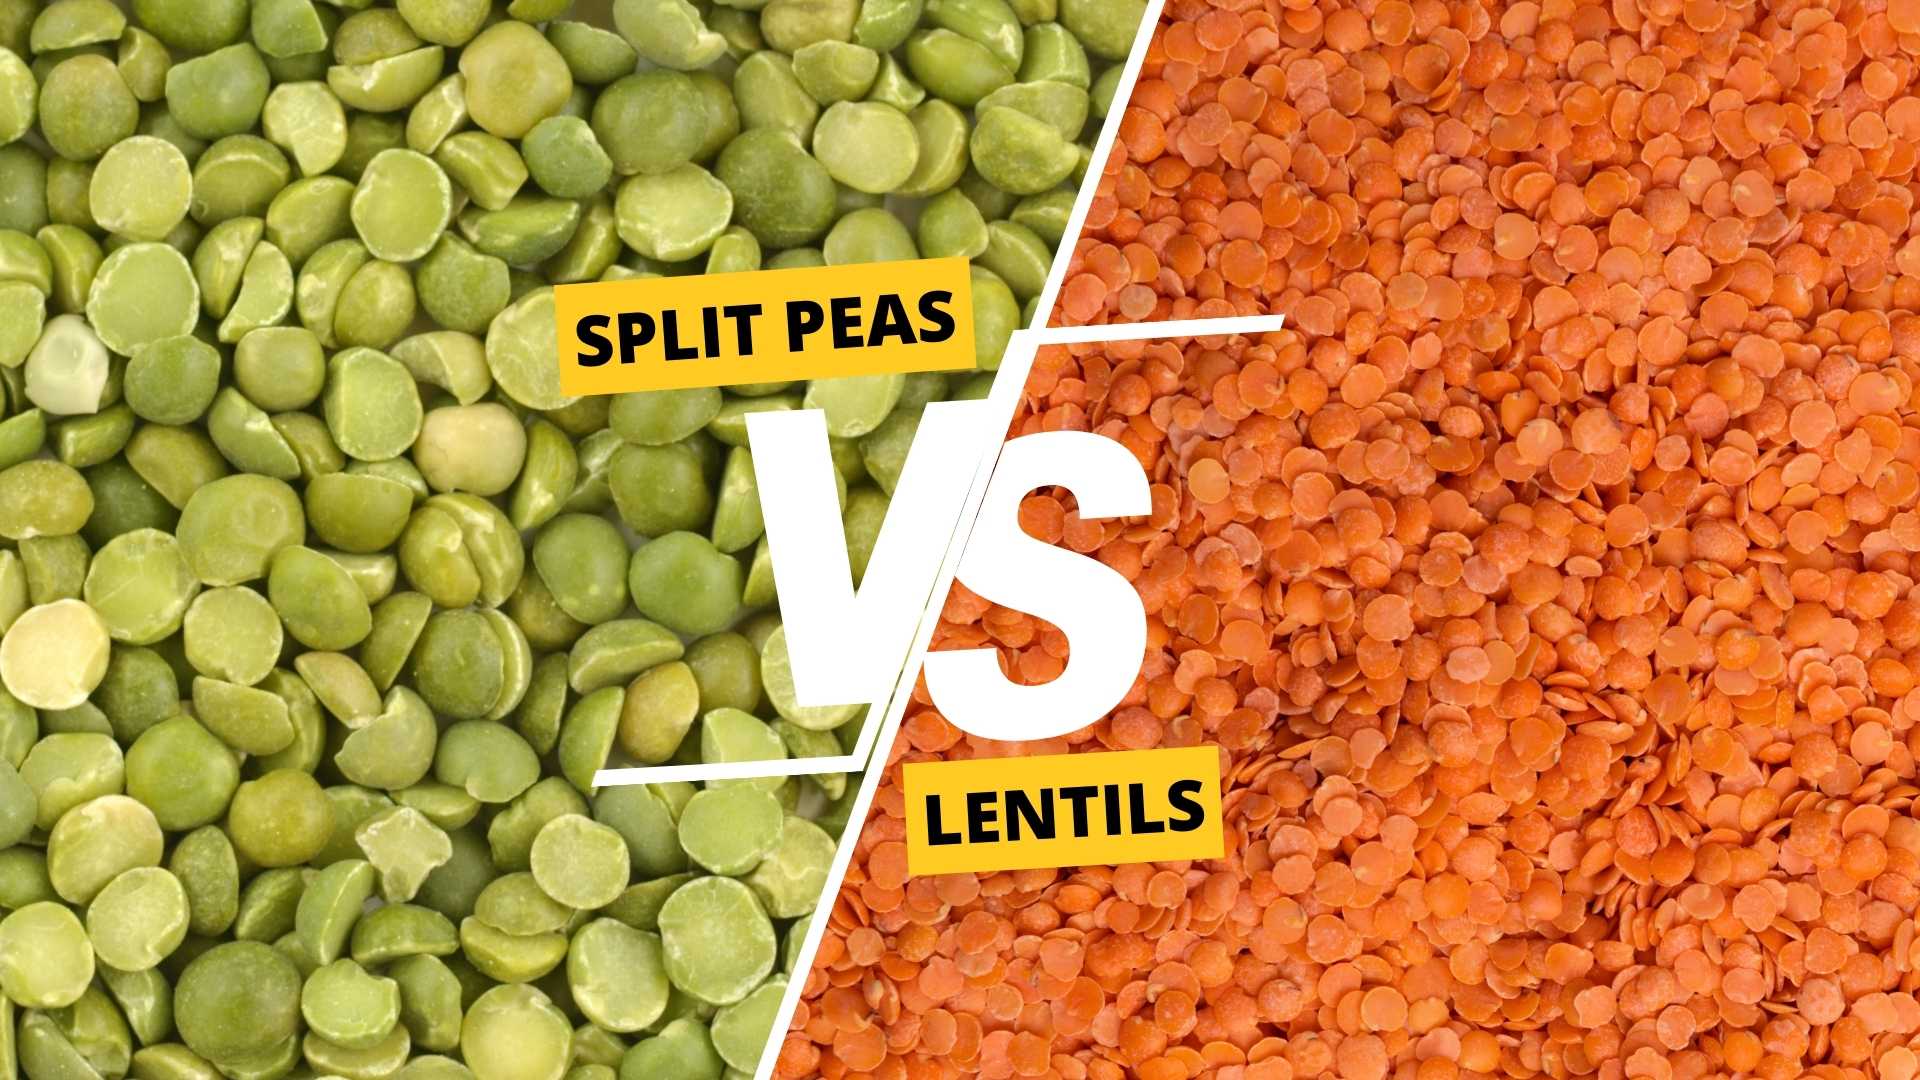 Split Peas vs Lentils in a Head-to-Head Comparison